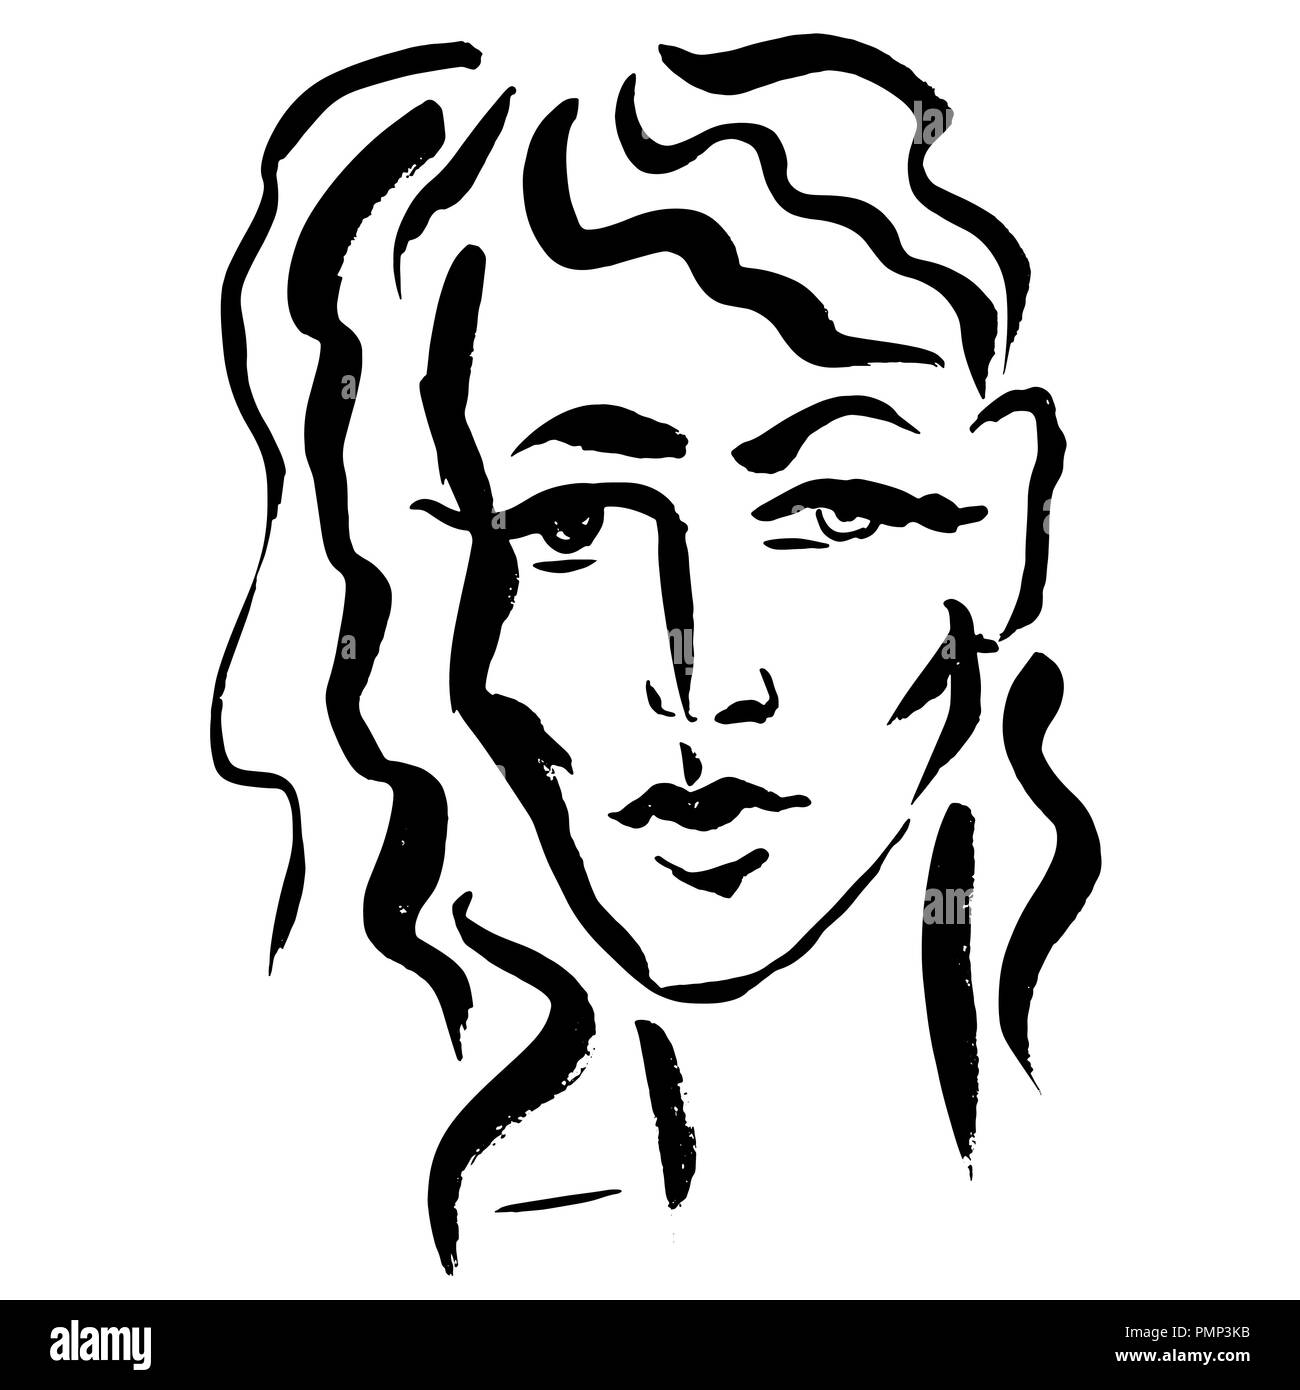 Brush grunge style simple portrait. Ink handmade drawing. Modern vector illustration. Stock Vector